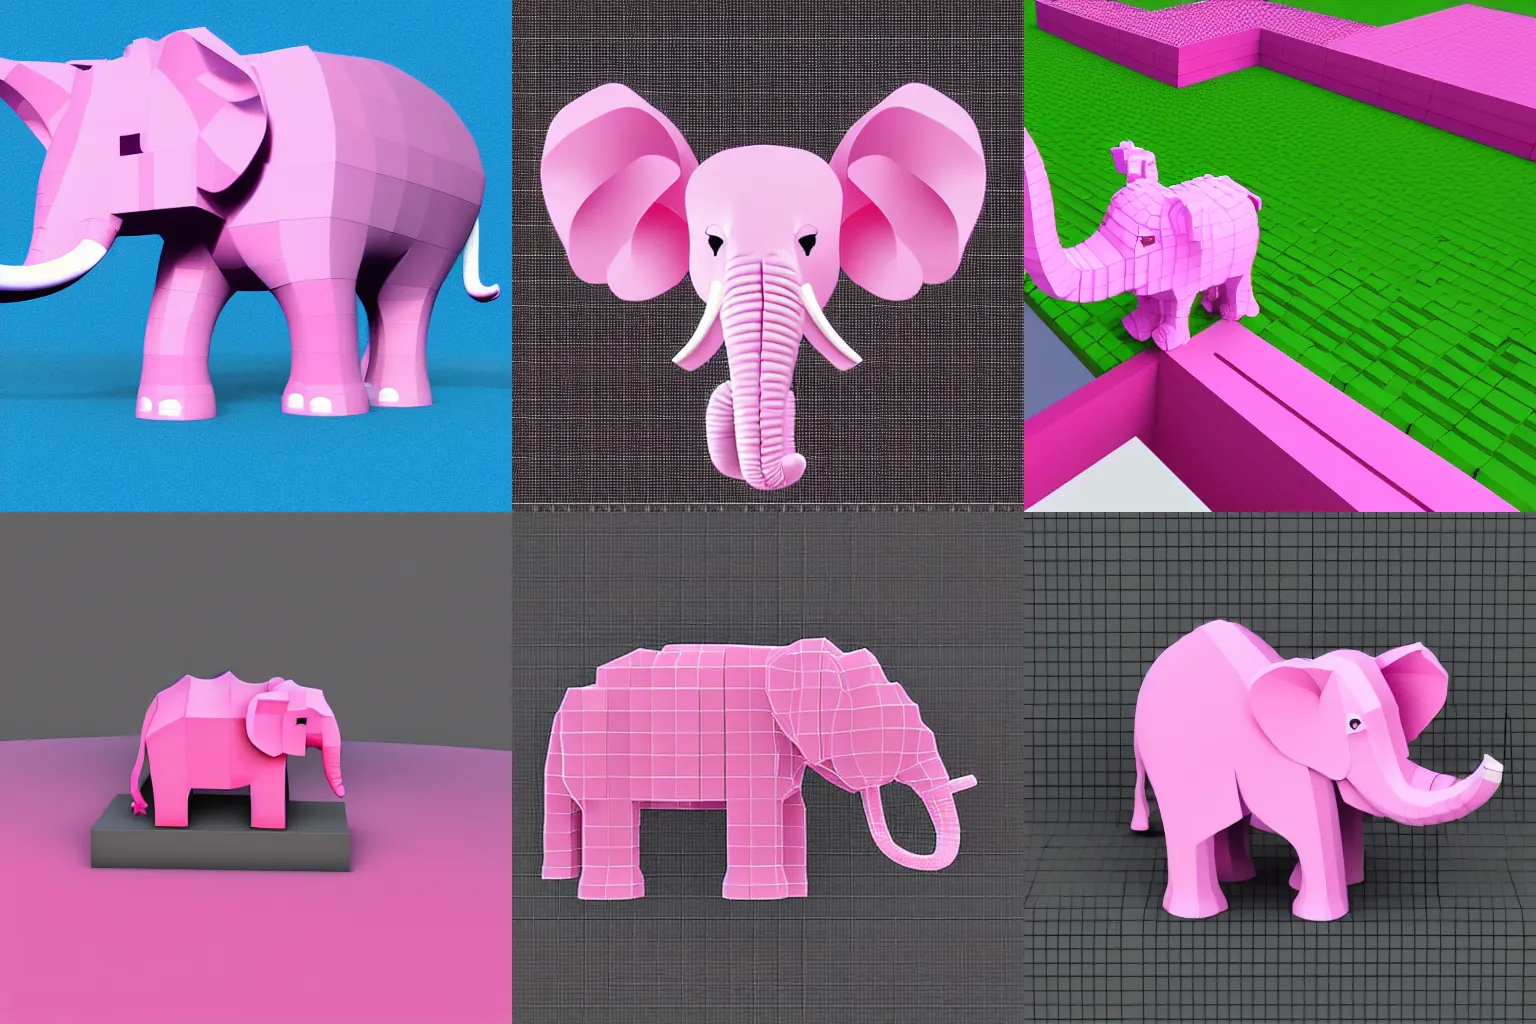 Prompt: 3d logo of voxel pink elephant